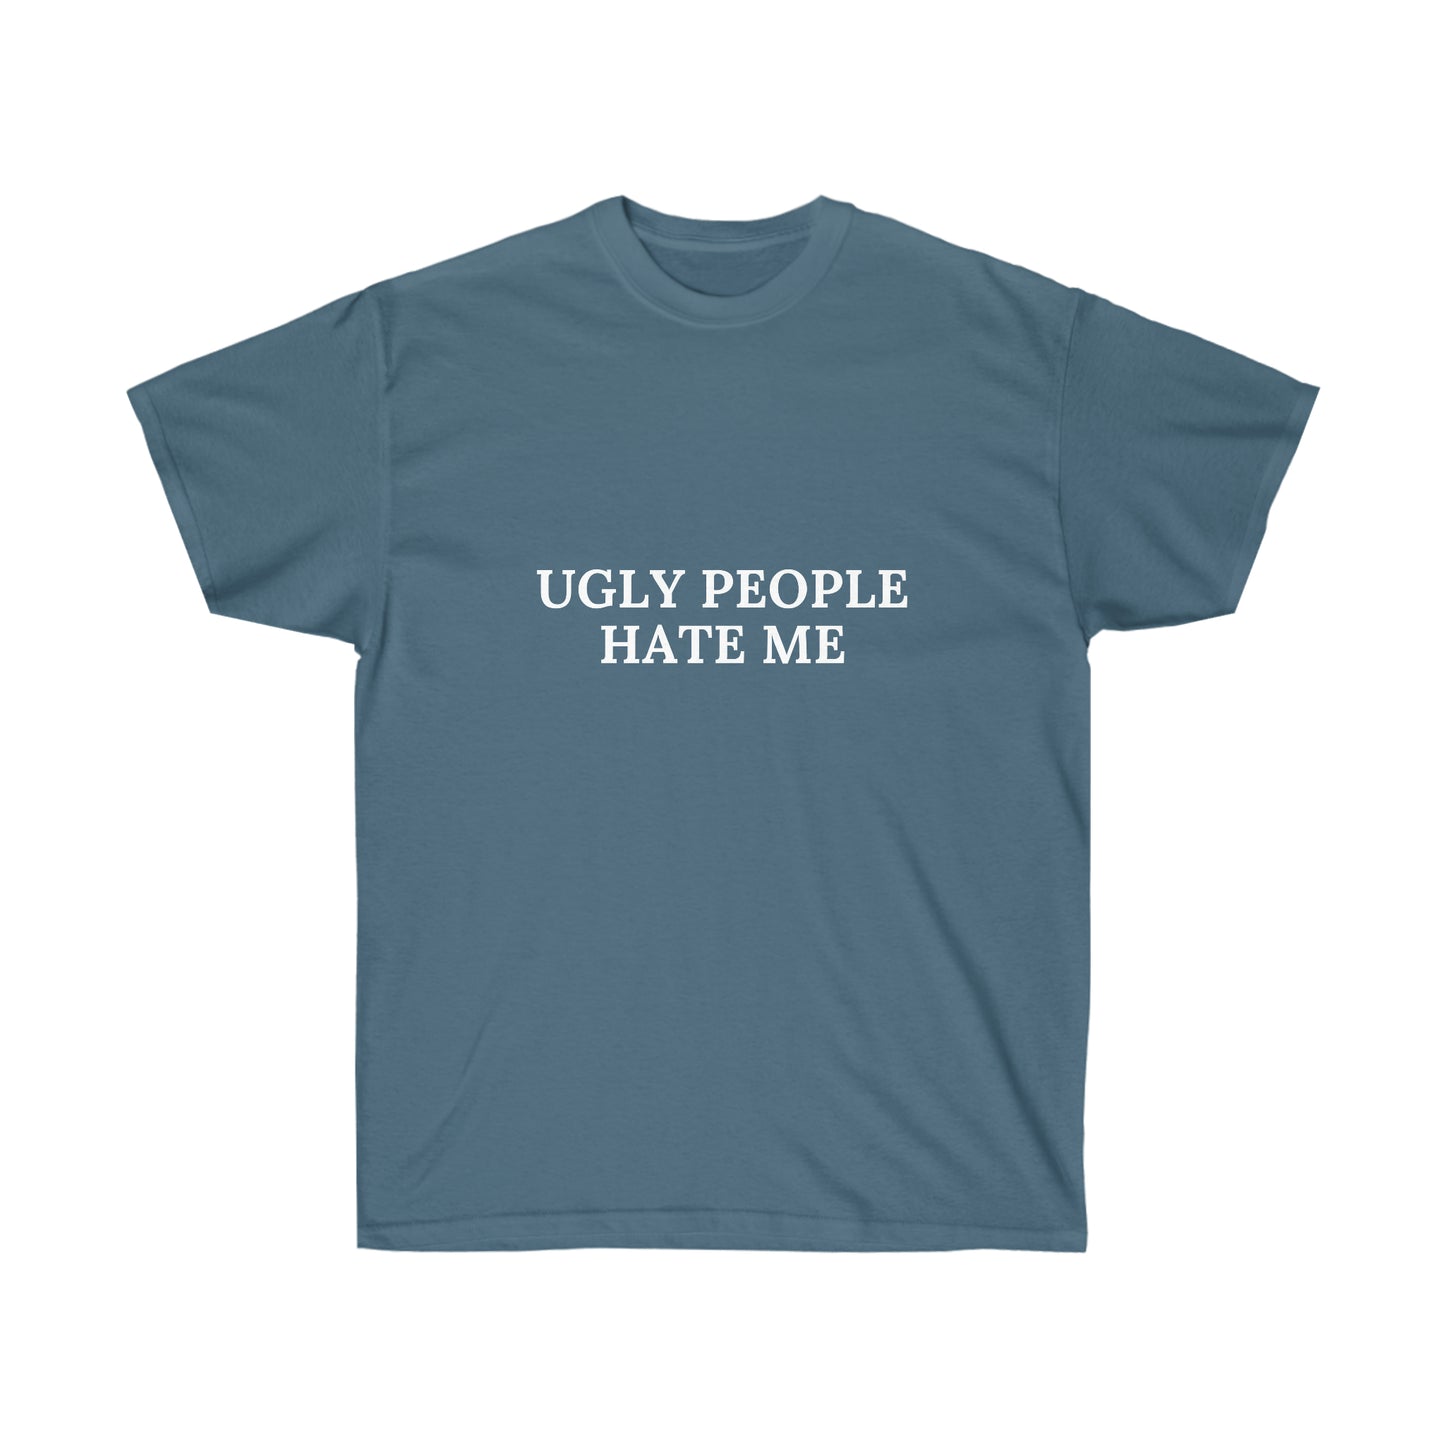 Ugly people hate me | Tee